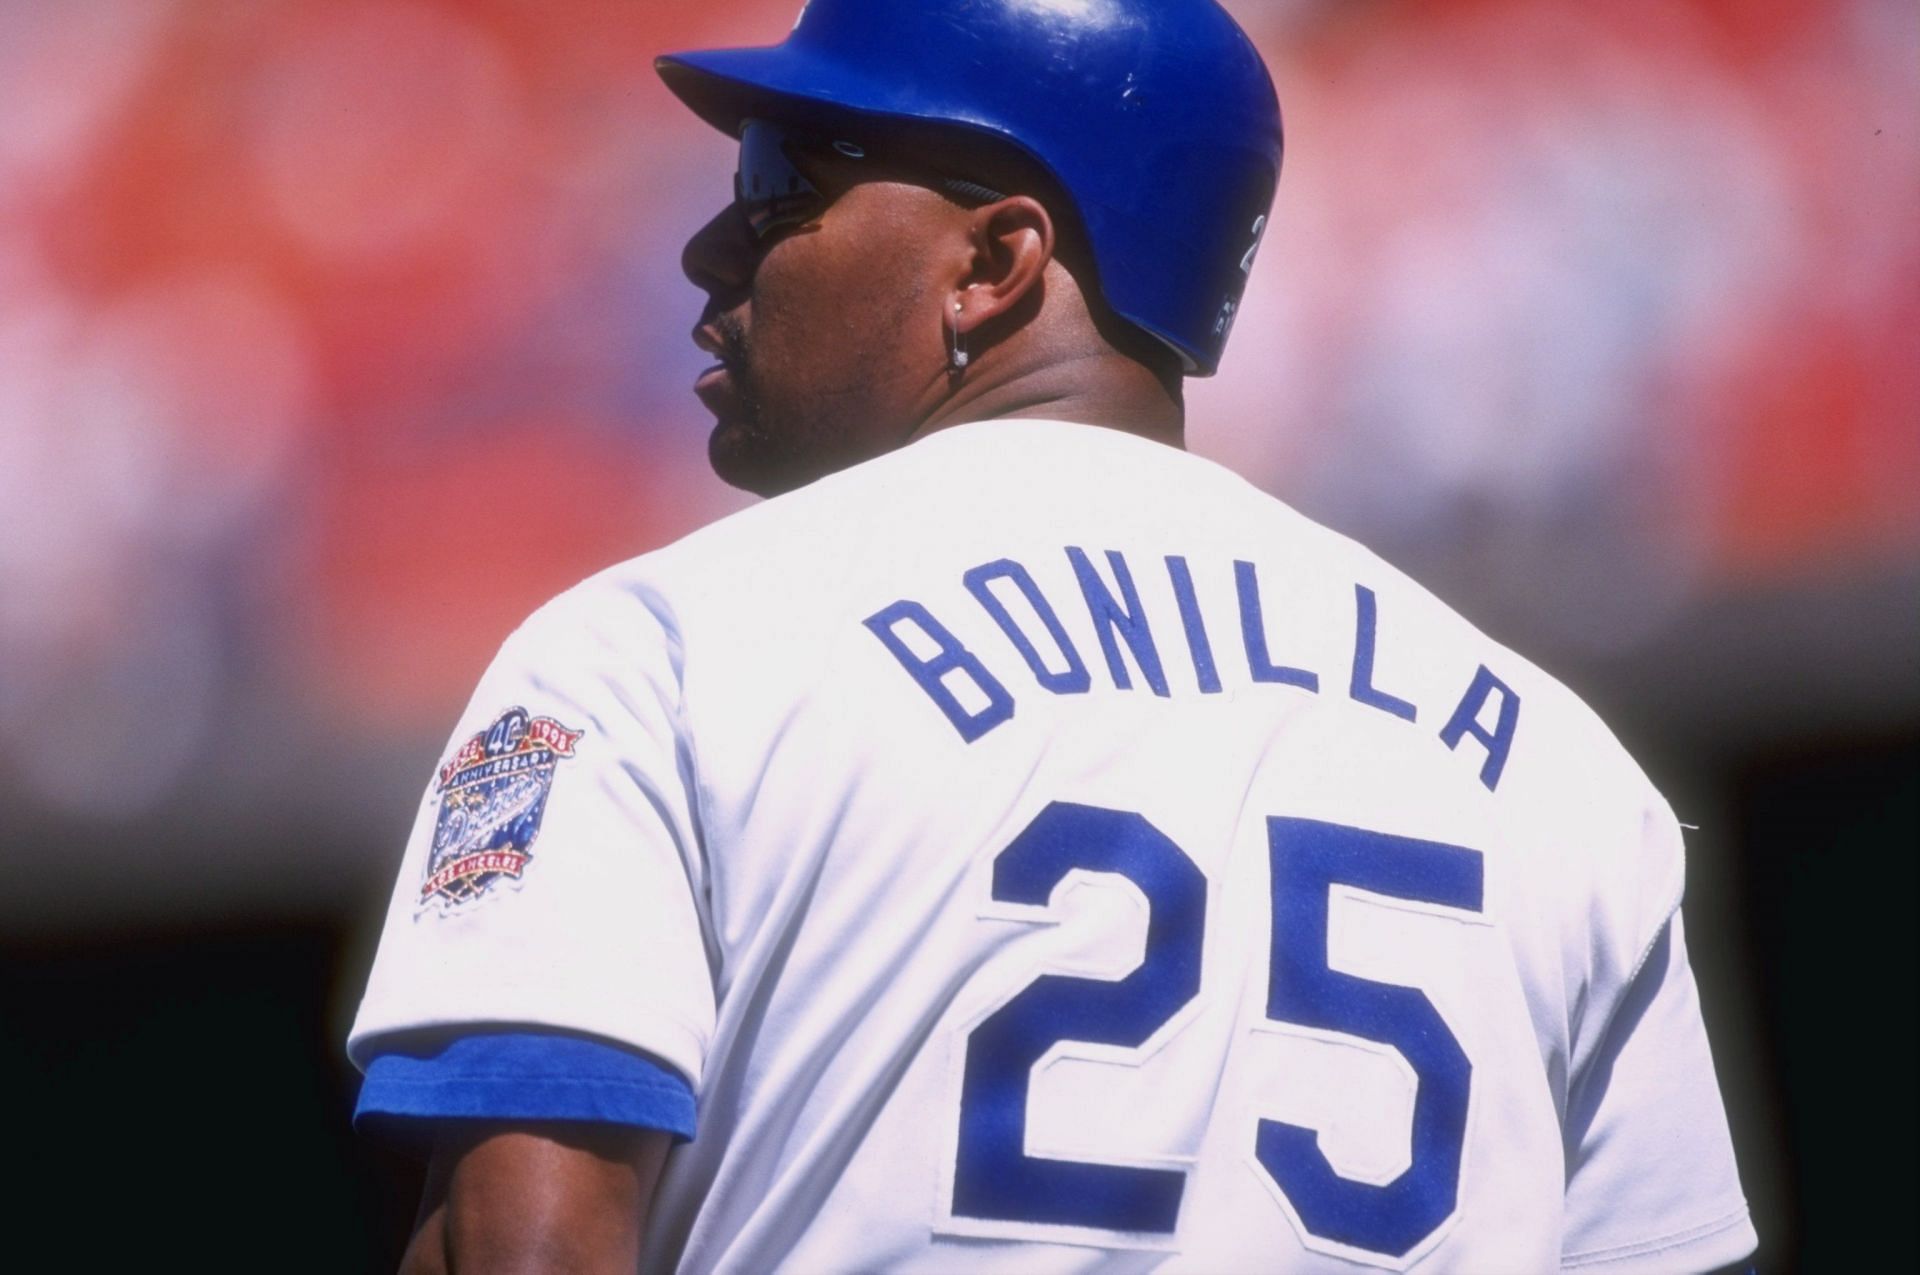 When is Bobby Bonilla day?